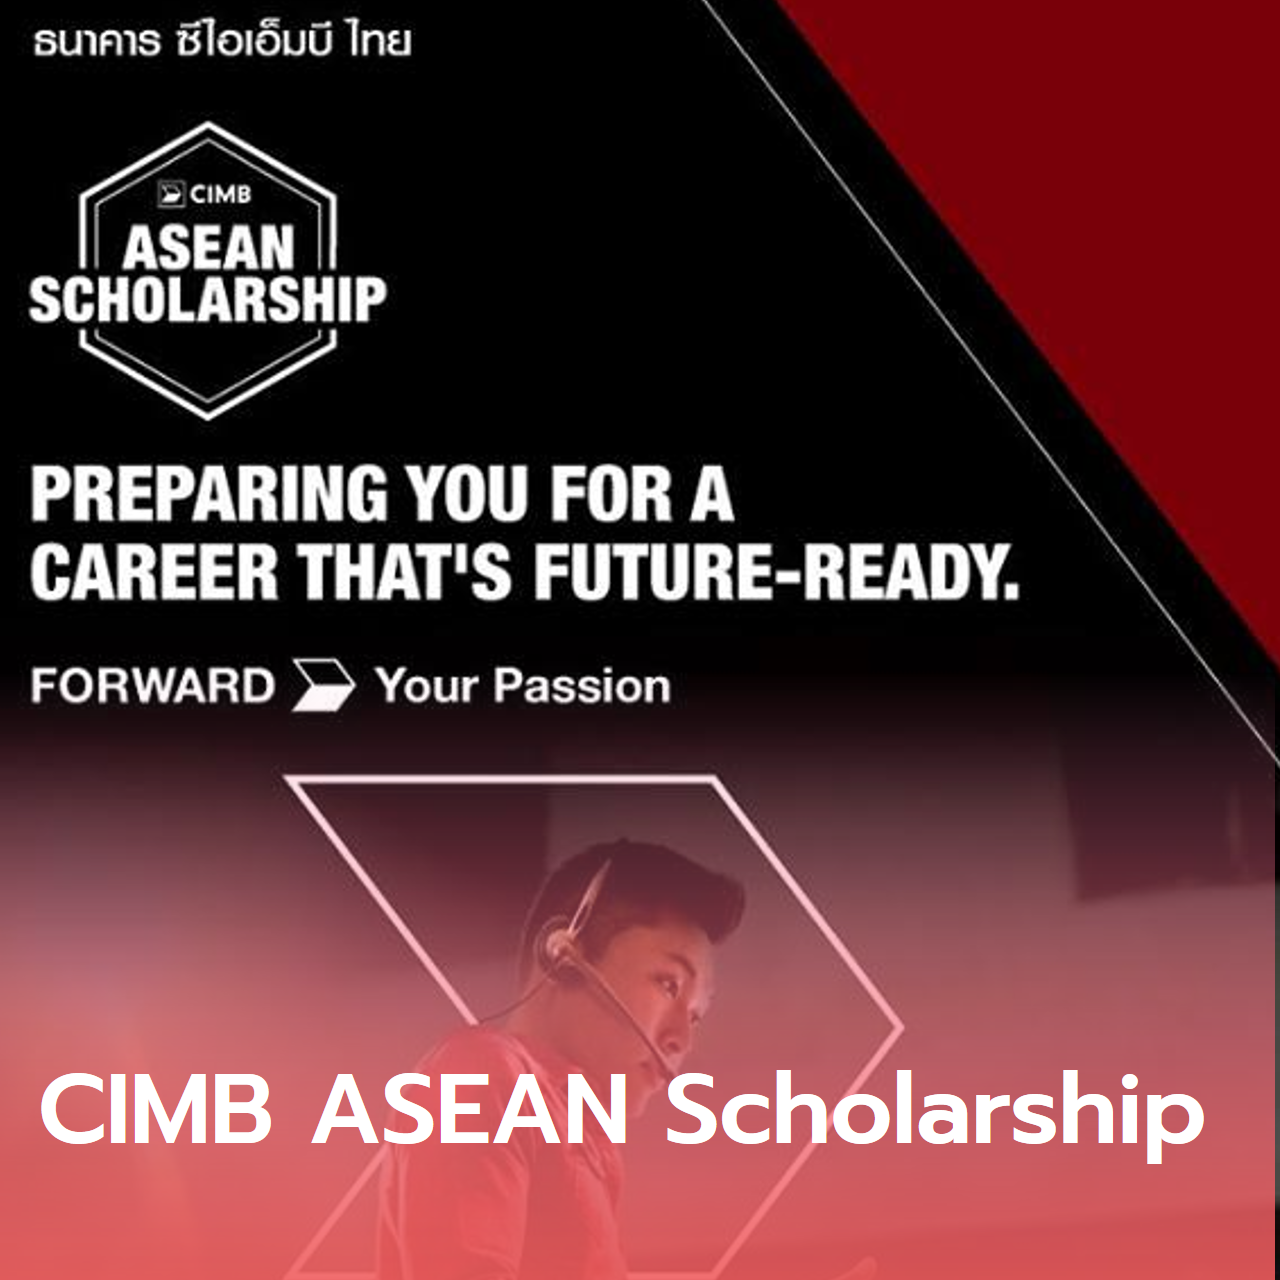  CIMB ASEAN Scholarship